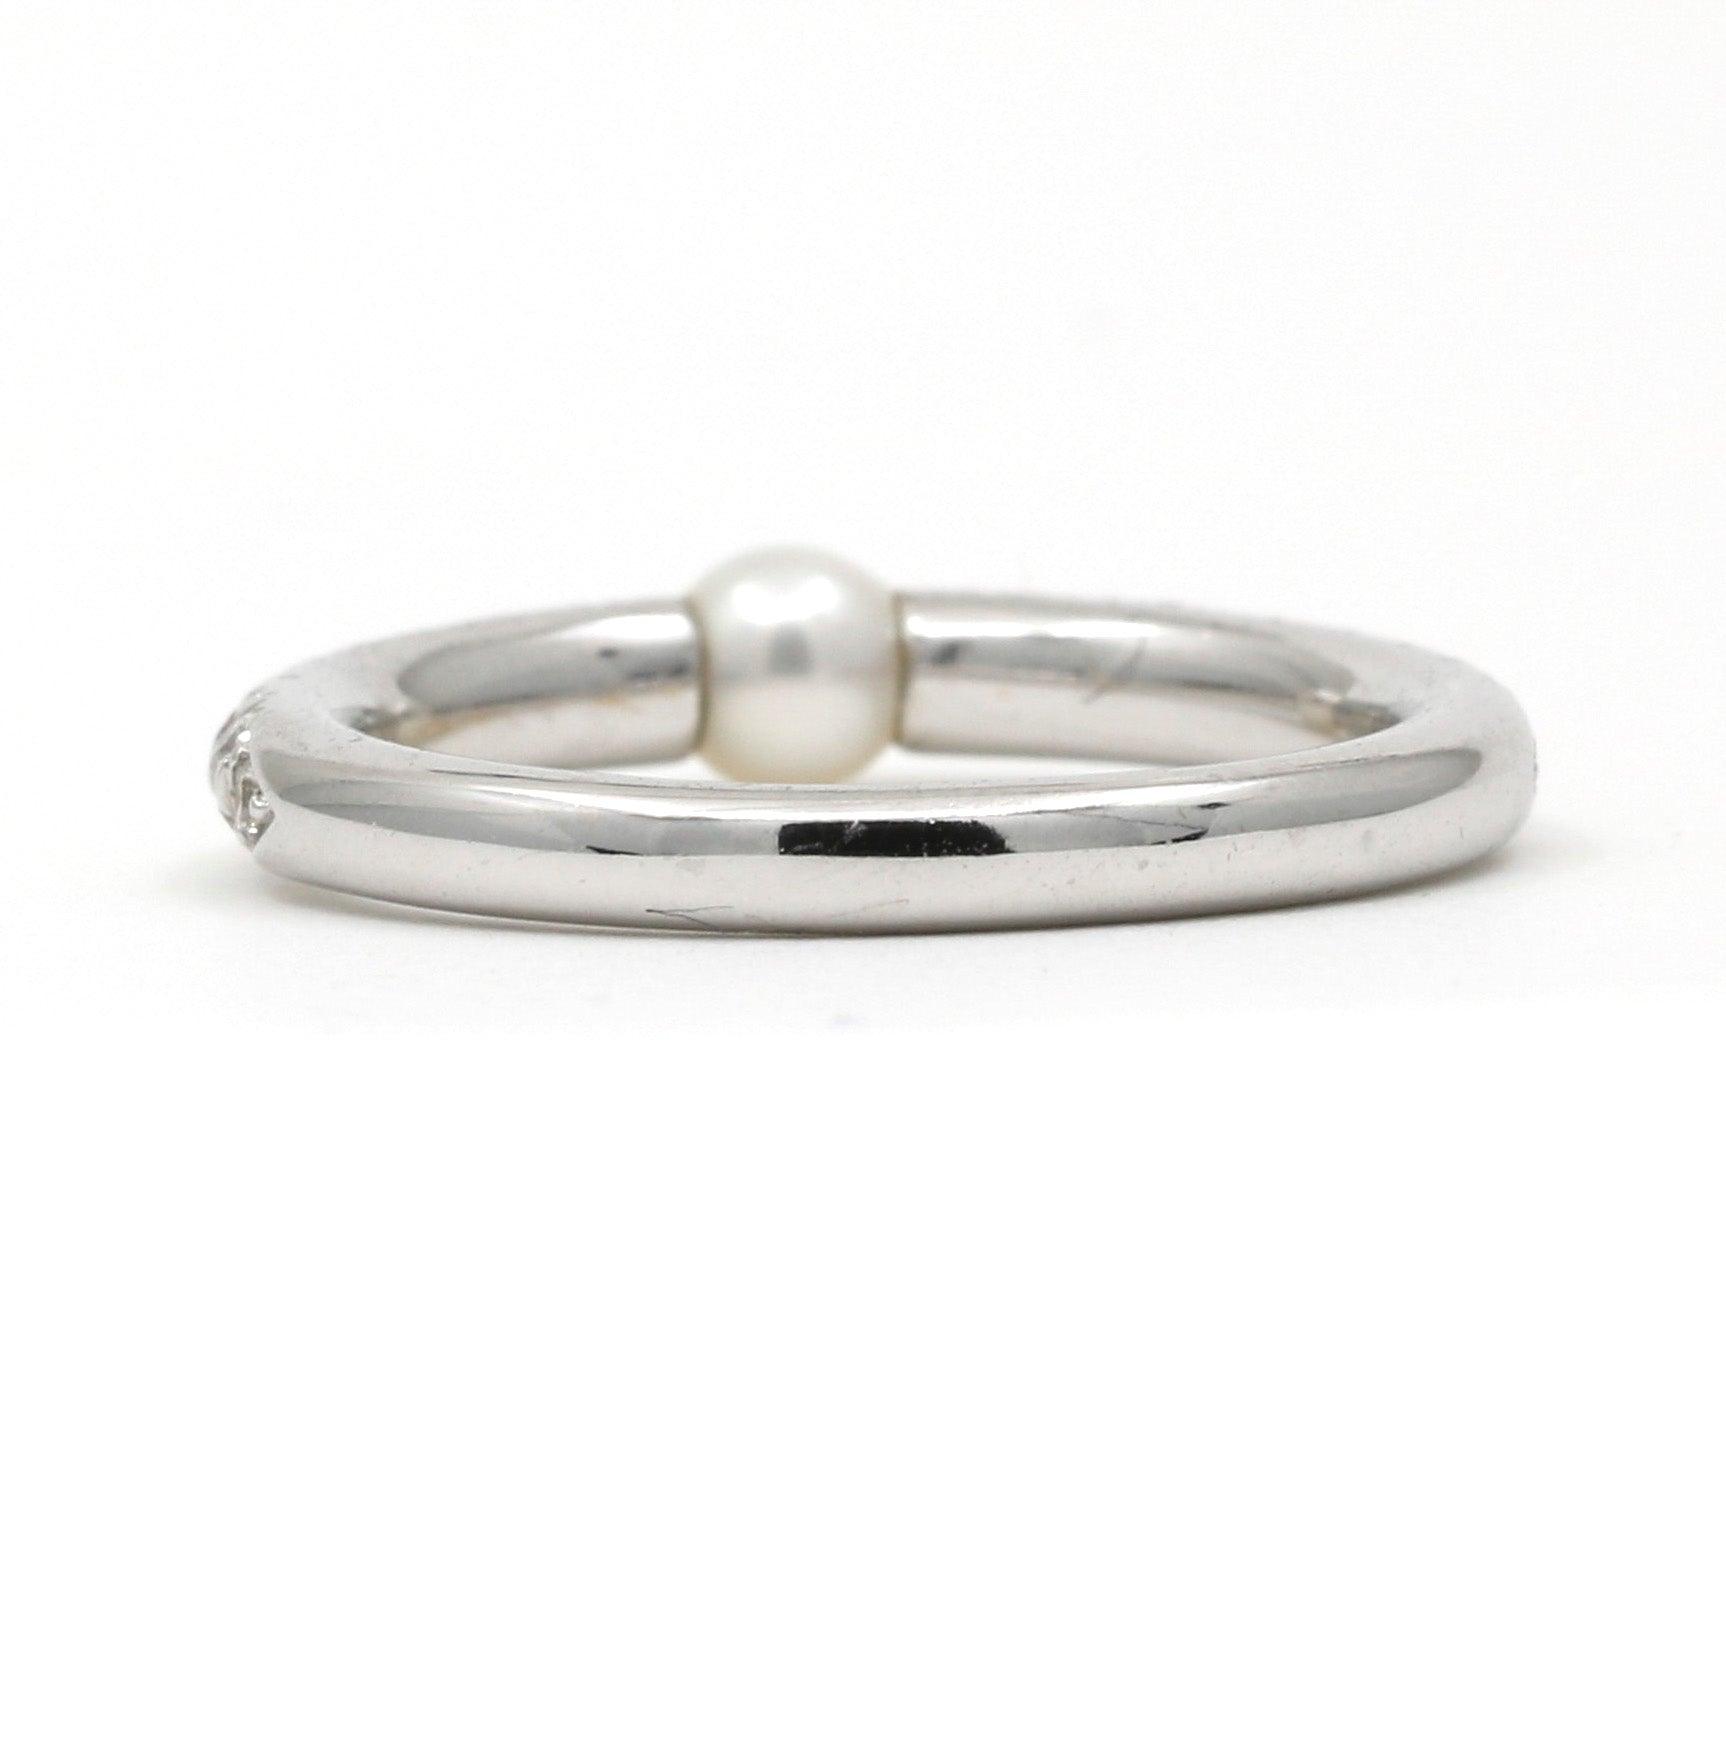 Mimi Milano Nagai Sirenette Pearl Diamond Band Ring in 18k White Gold - 31 Jewels Inc.